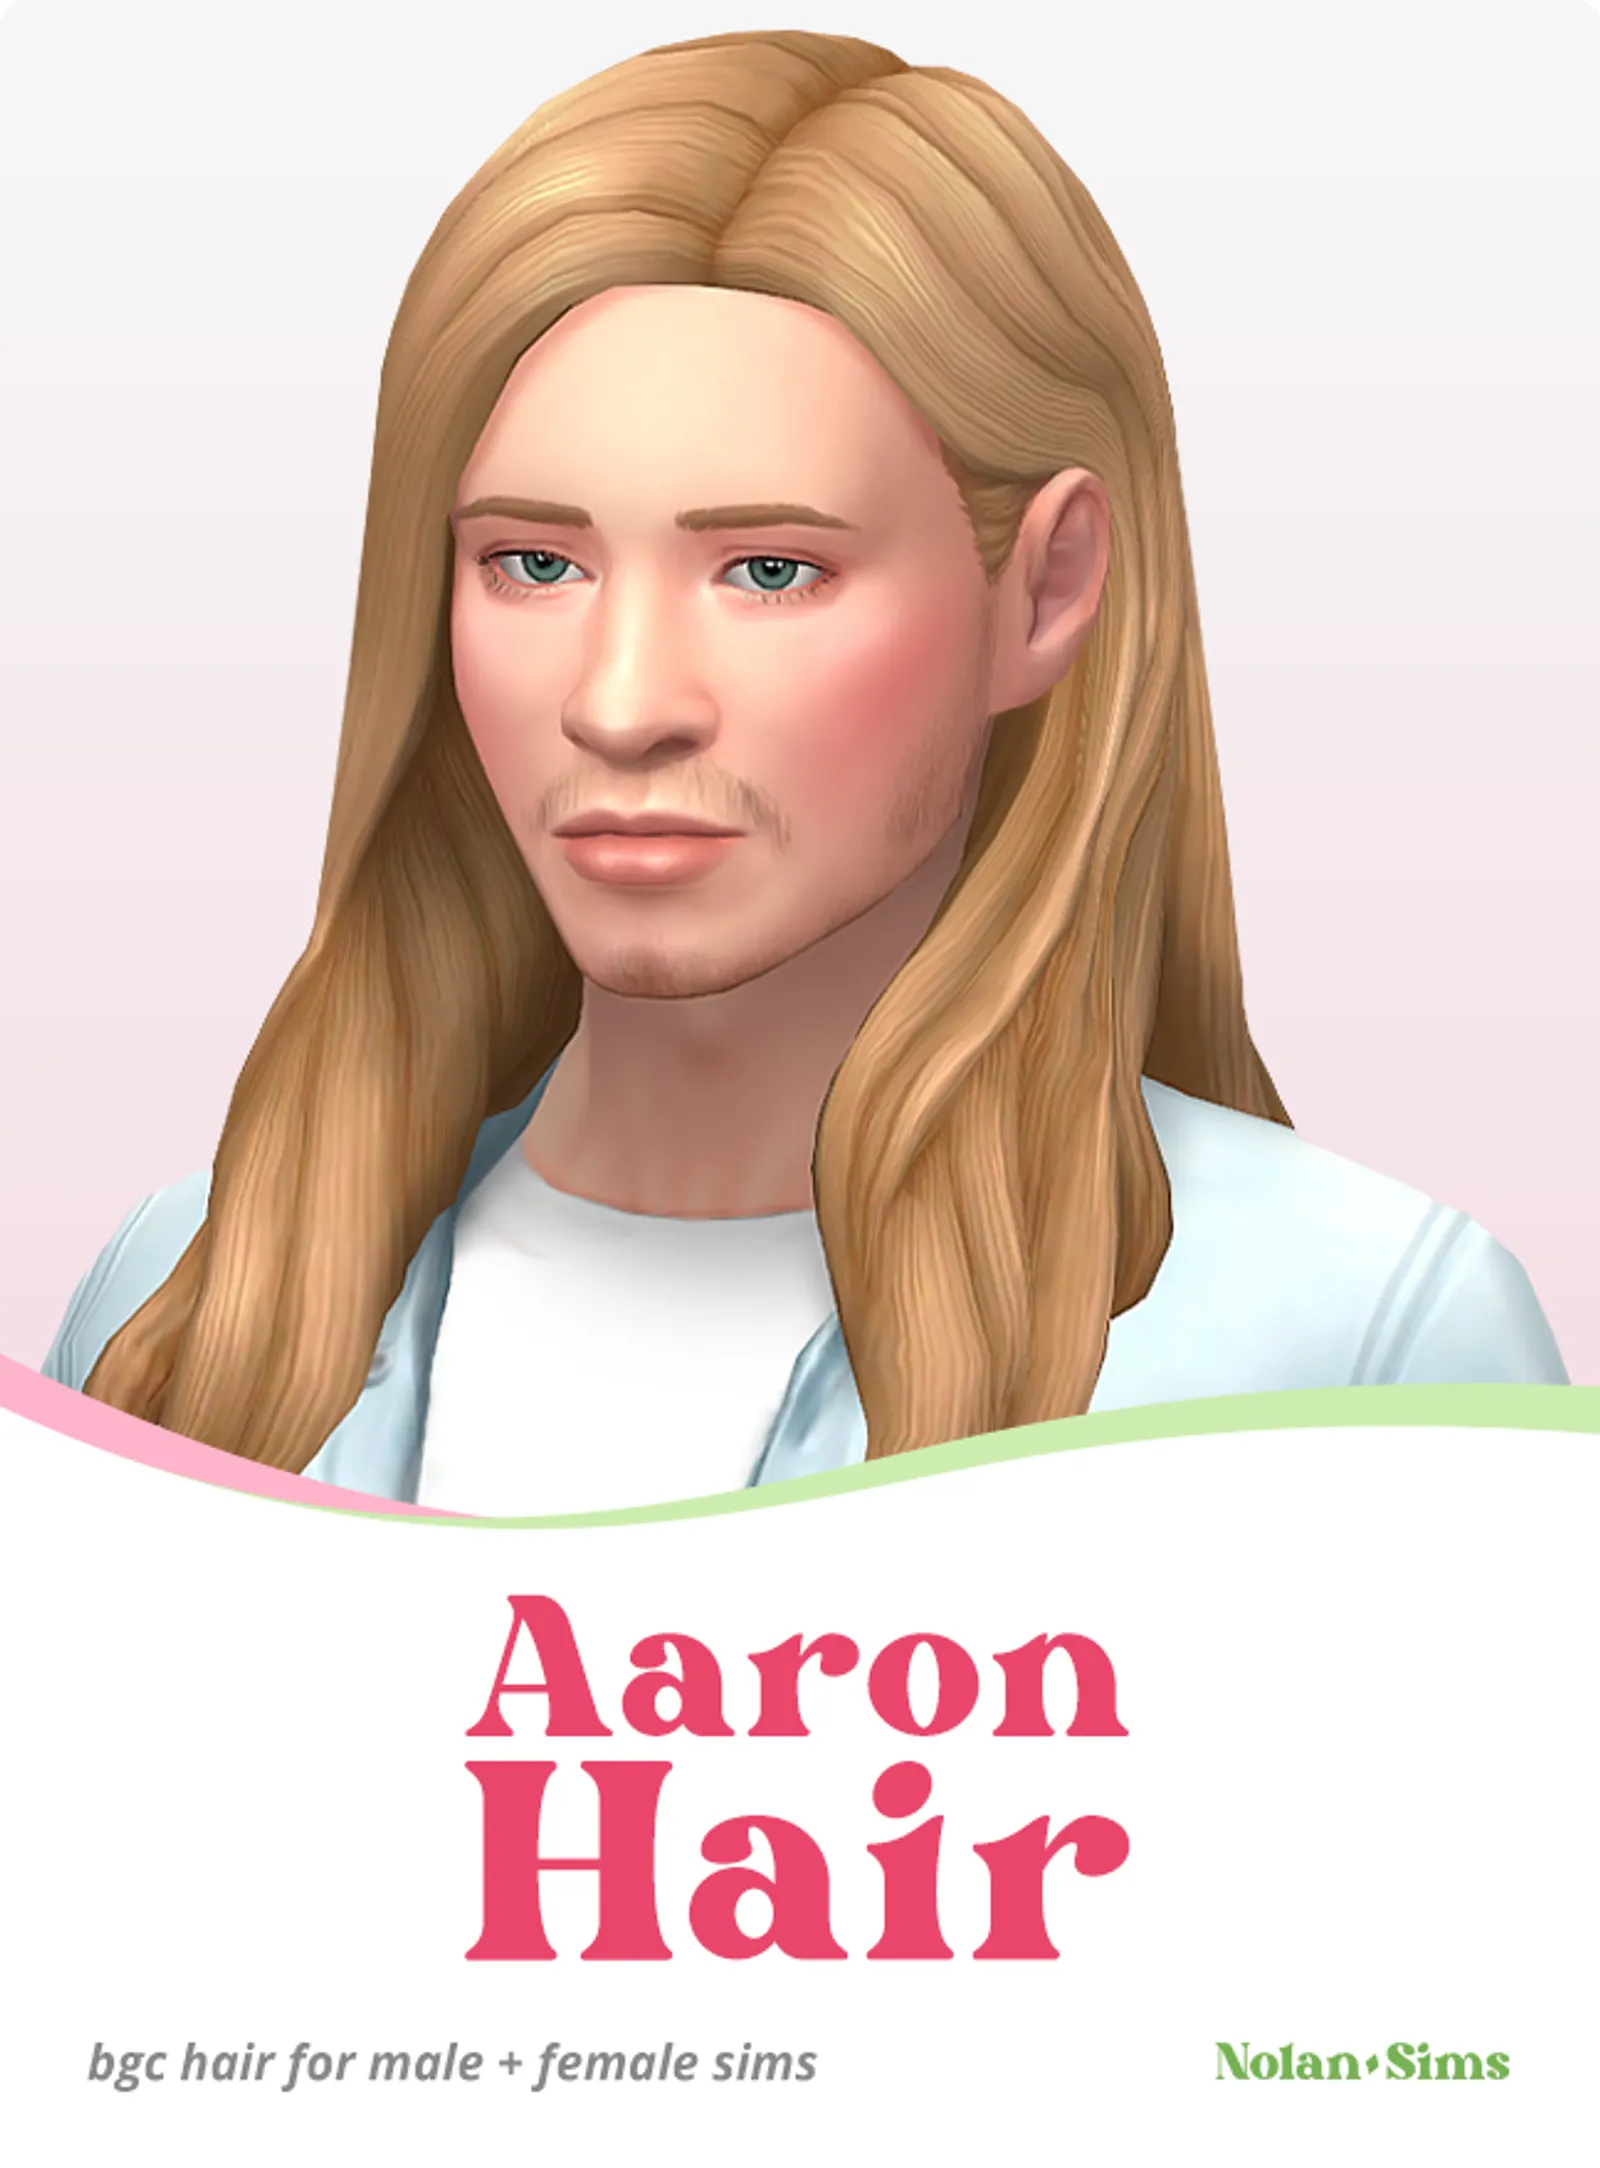 Aaron Hair